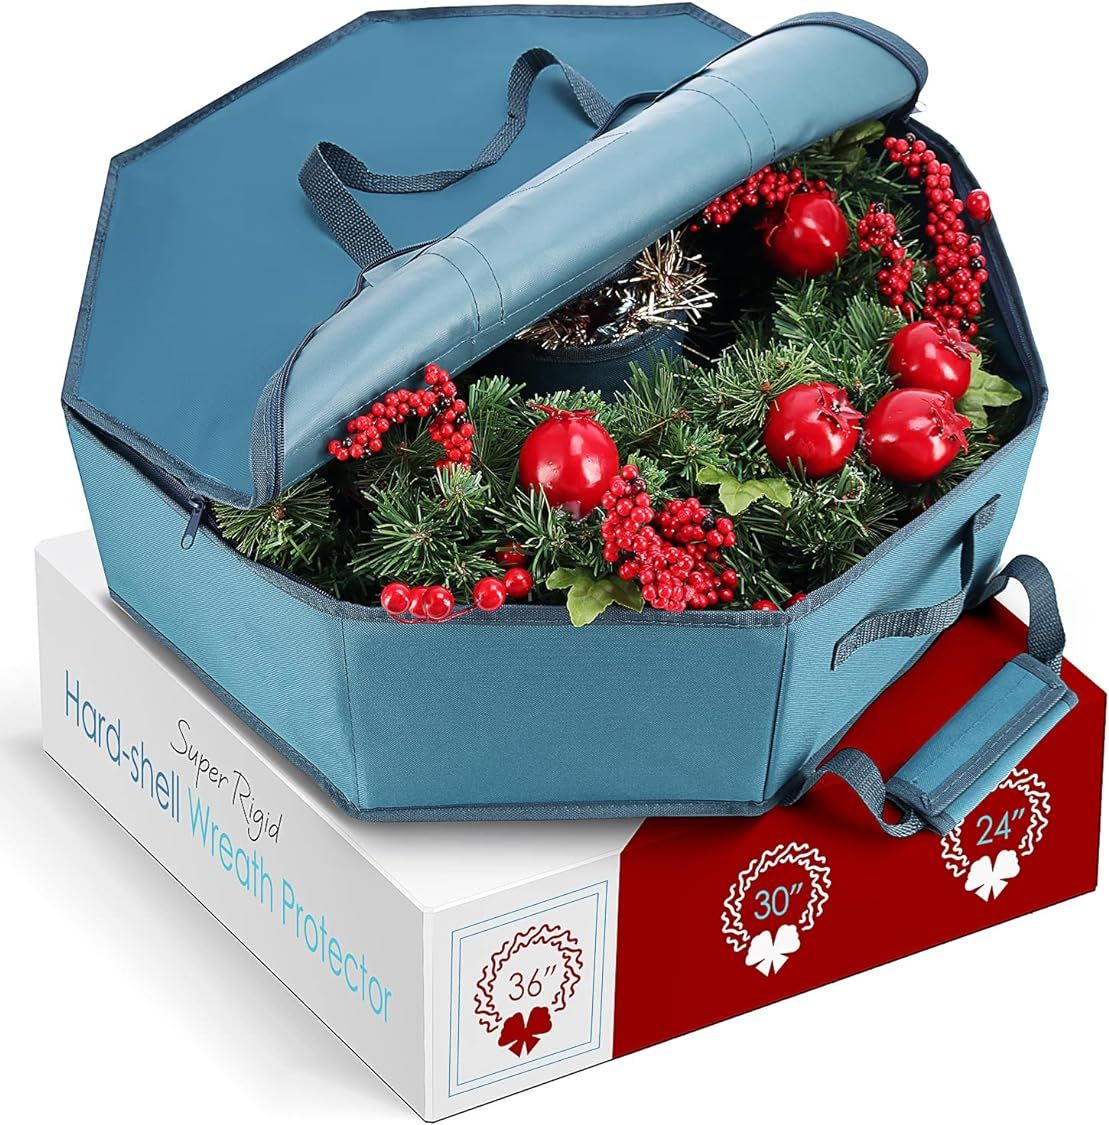 Hearth & Harbor Wreath Storage Container - Hard Shell Christmas Wreath Storage Bag with Interior Poc | Amazon (US)